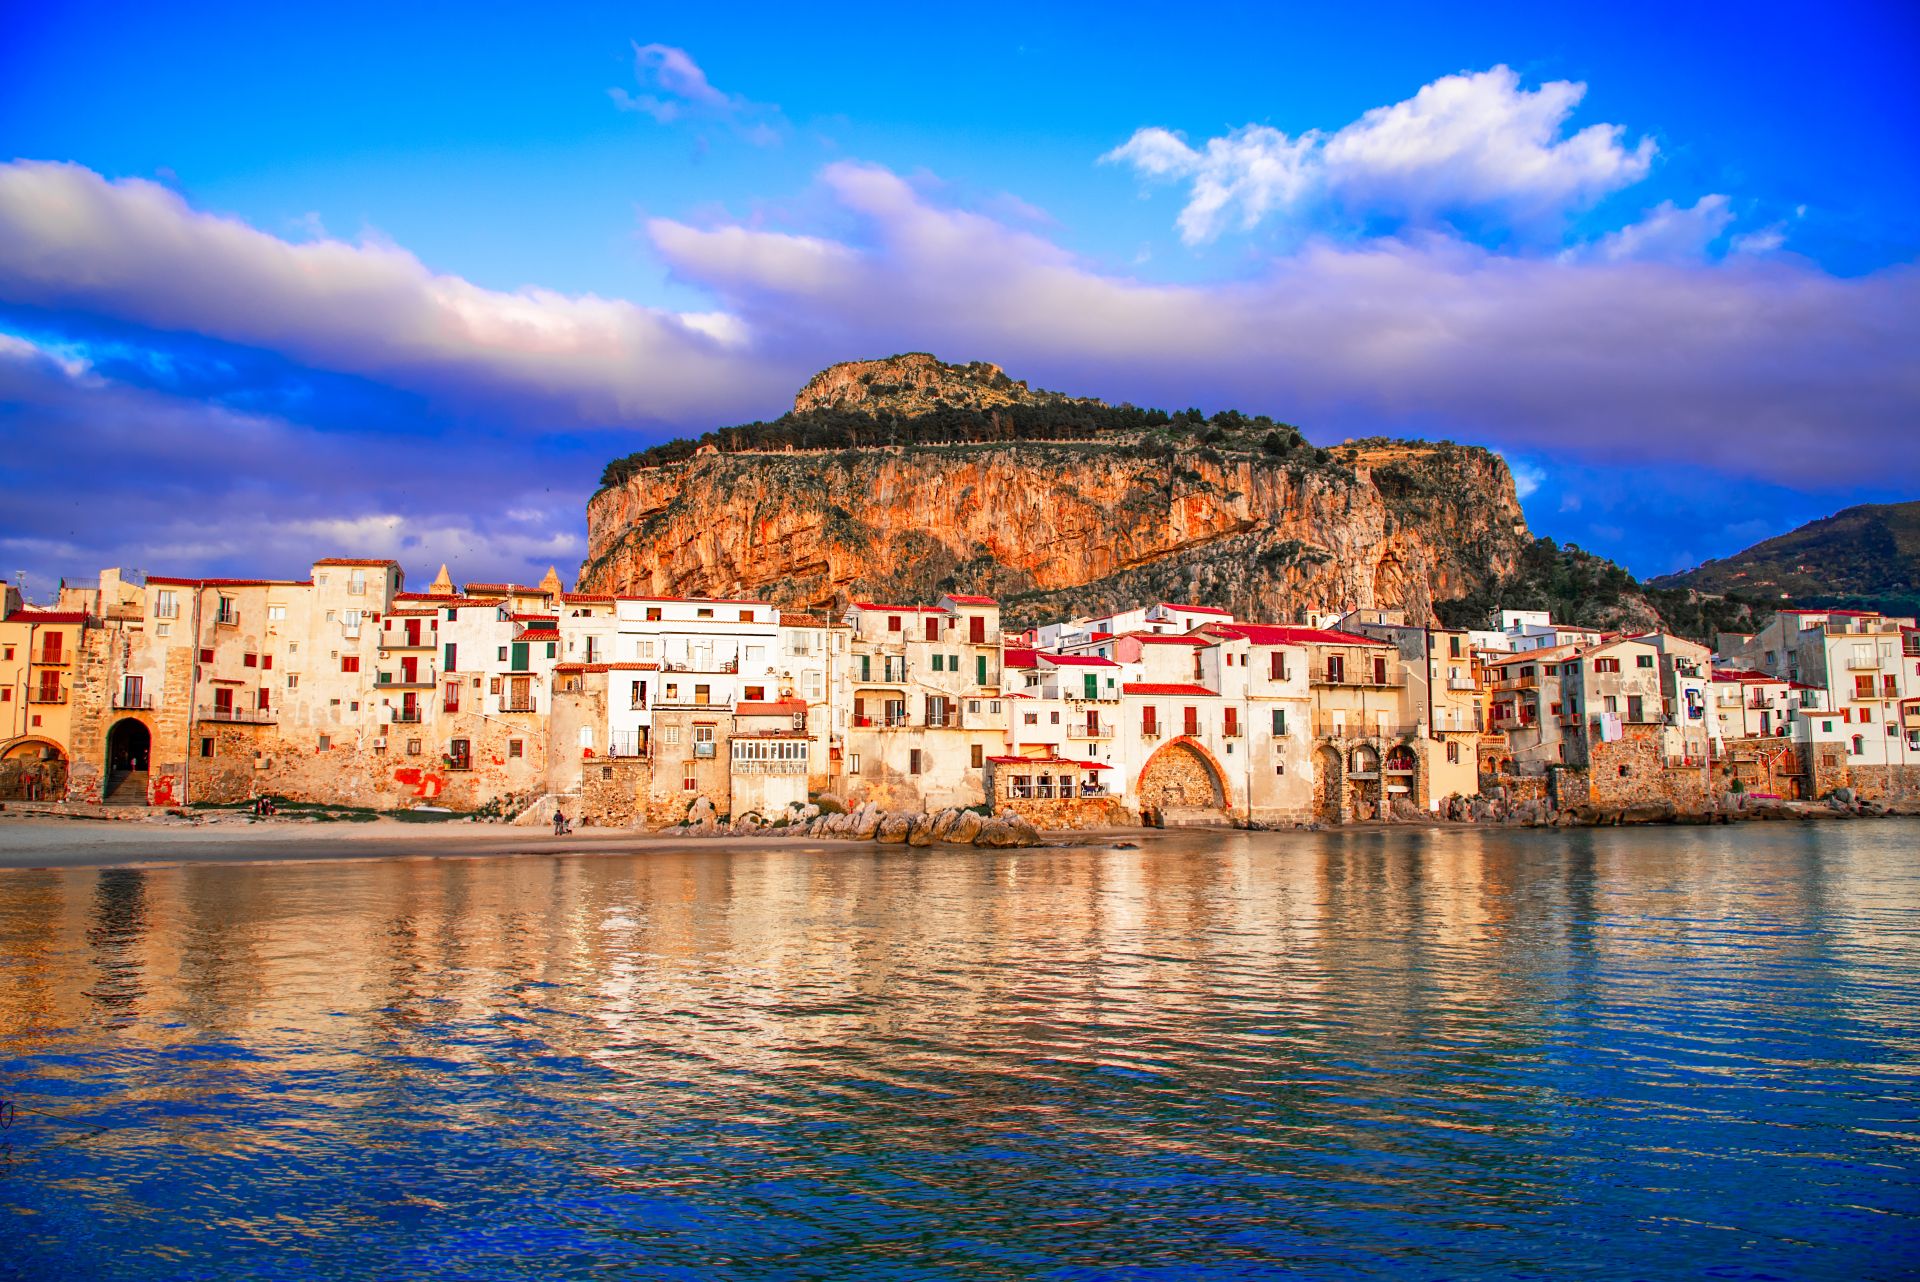 Cefalu-Sicily-Italy-Ligurian-Sea-and-medieval-city-Cefalu.Province-of-Palermo-Italy